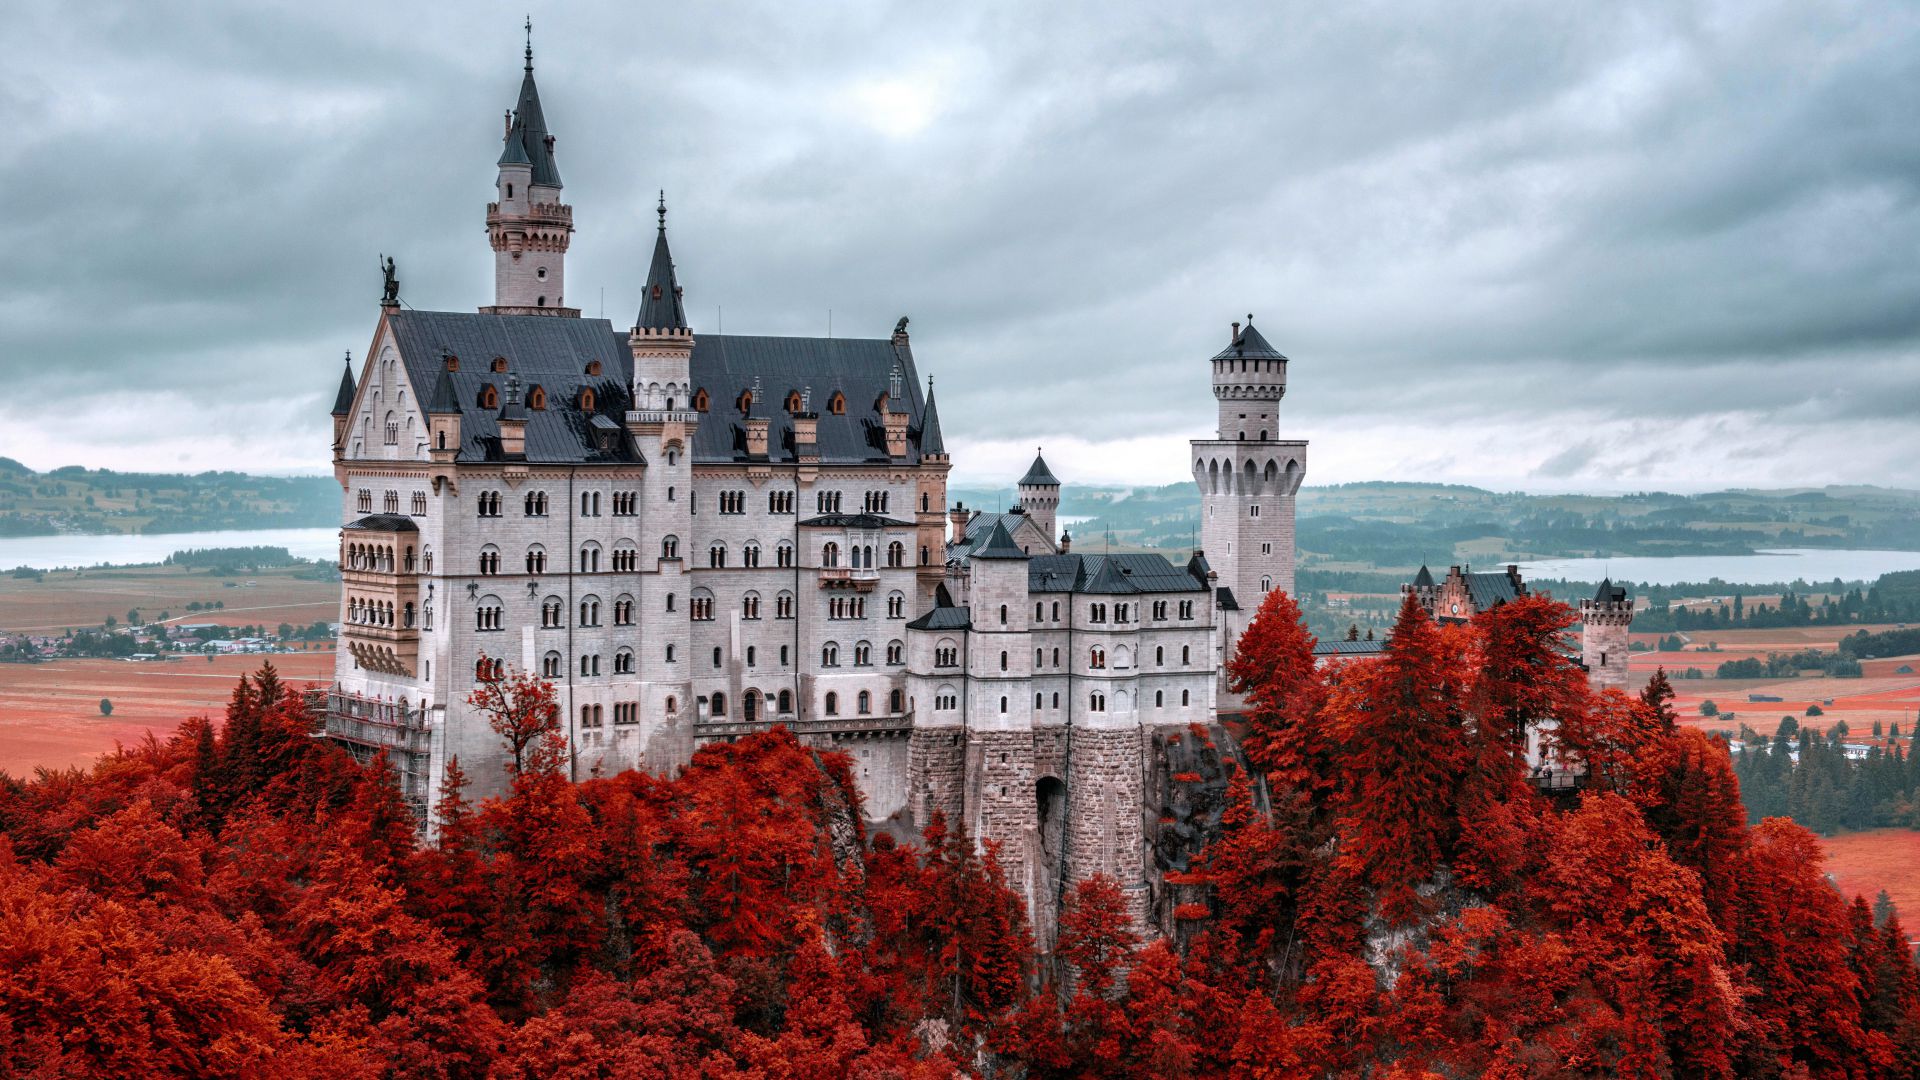 Neuschwanstein castle, Bavaria, Germany, Tourism, Travel (horizontal)